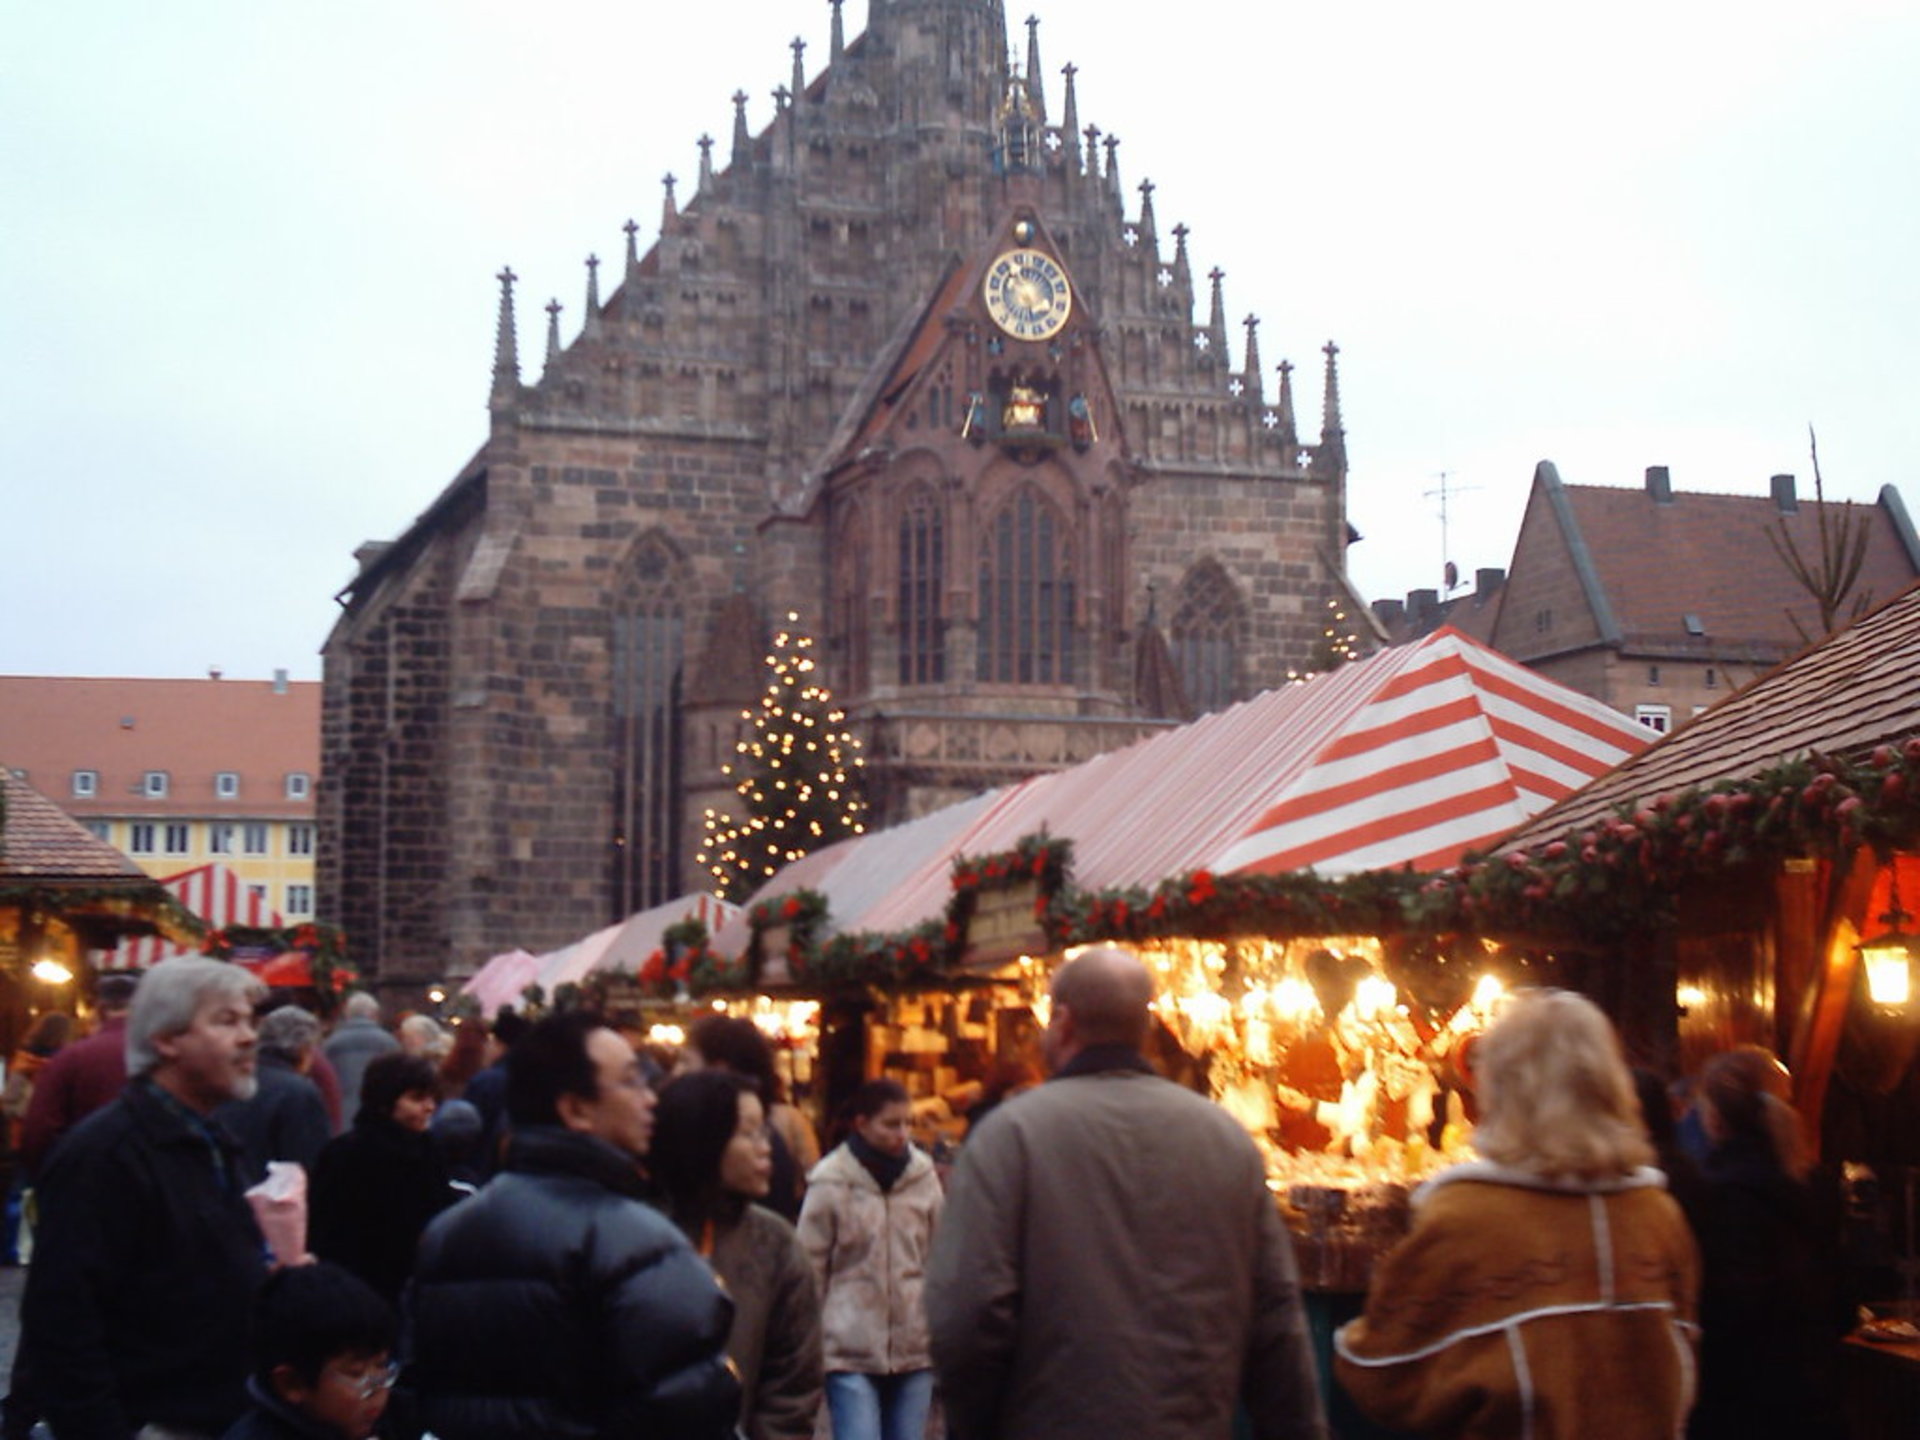 Marché de Noël de Nuremberg